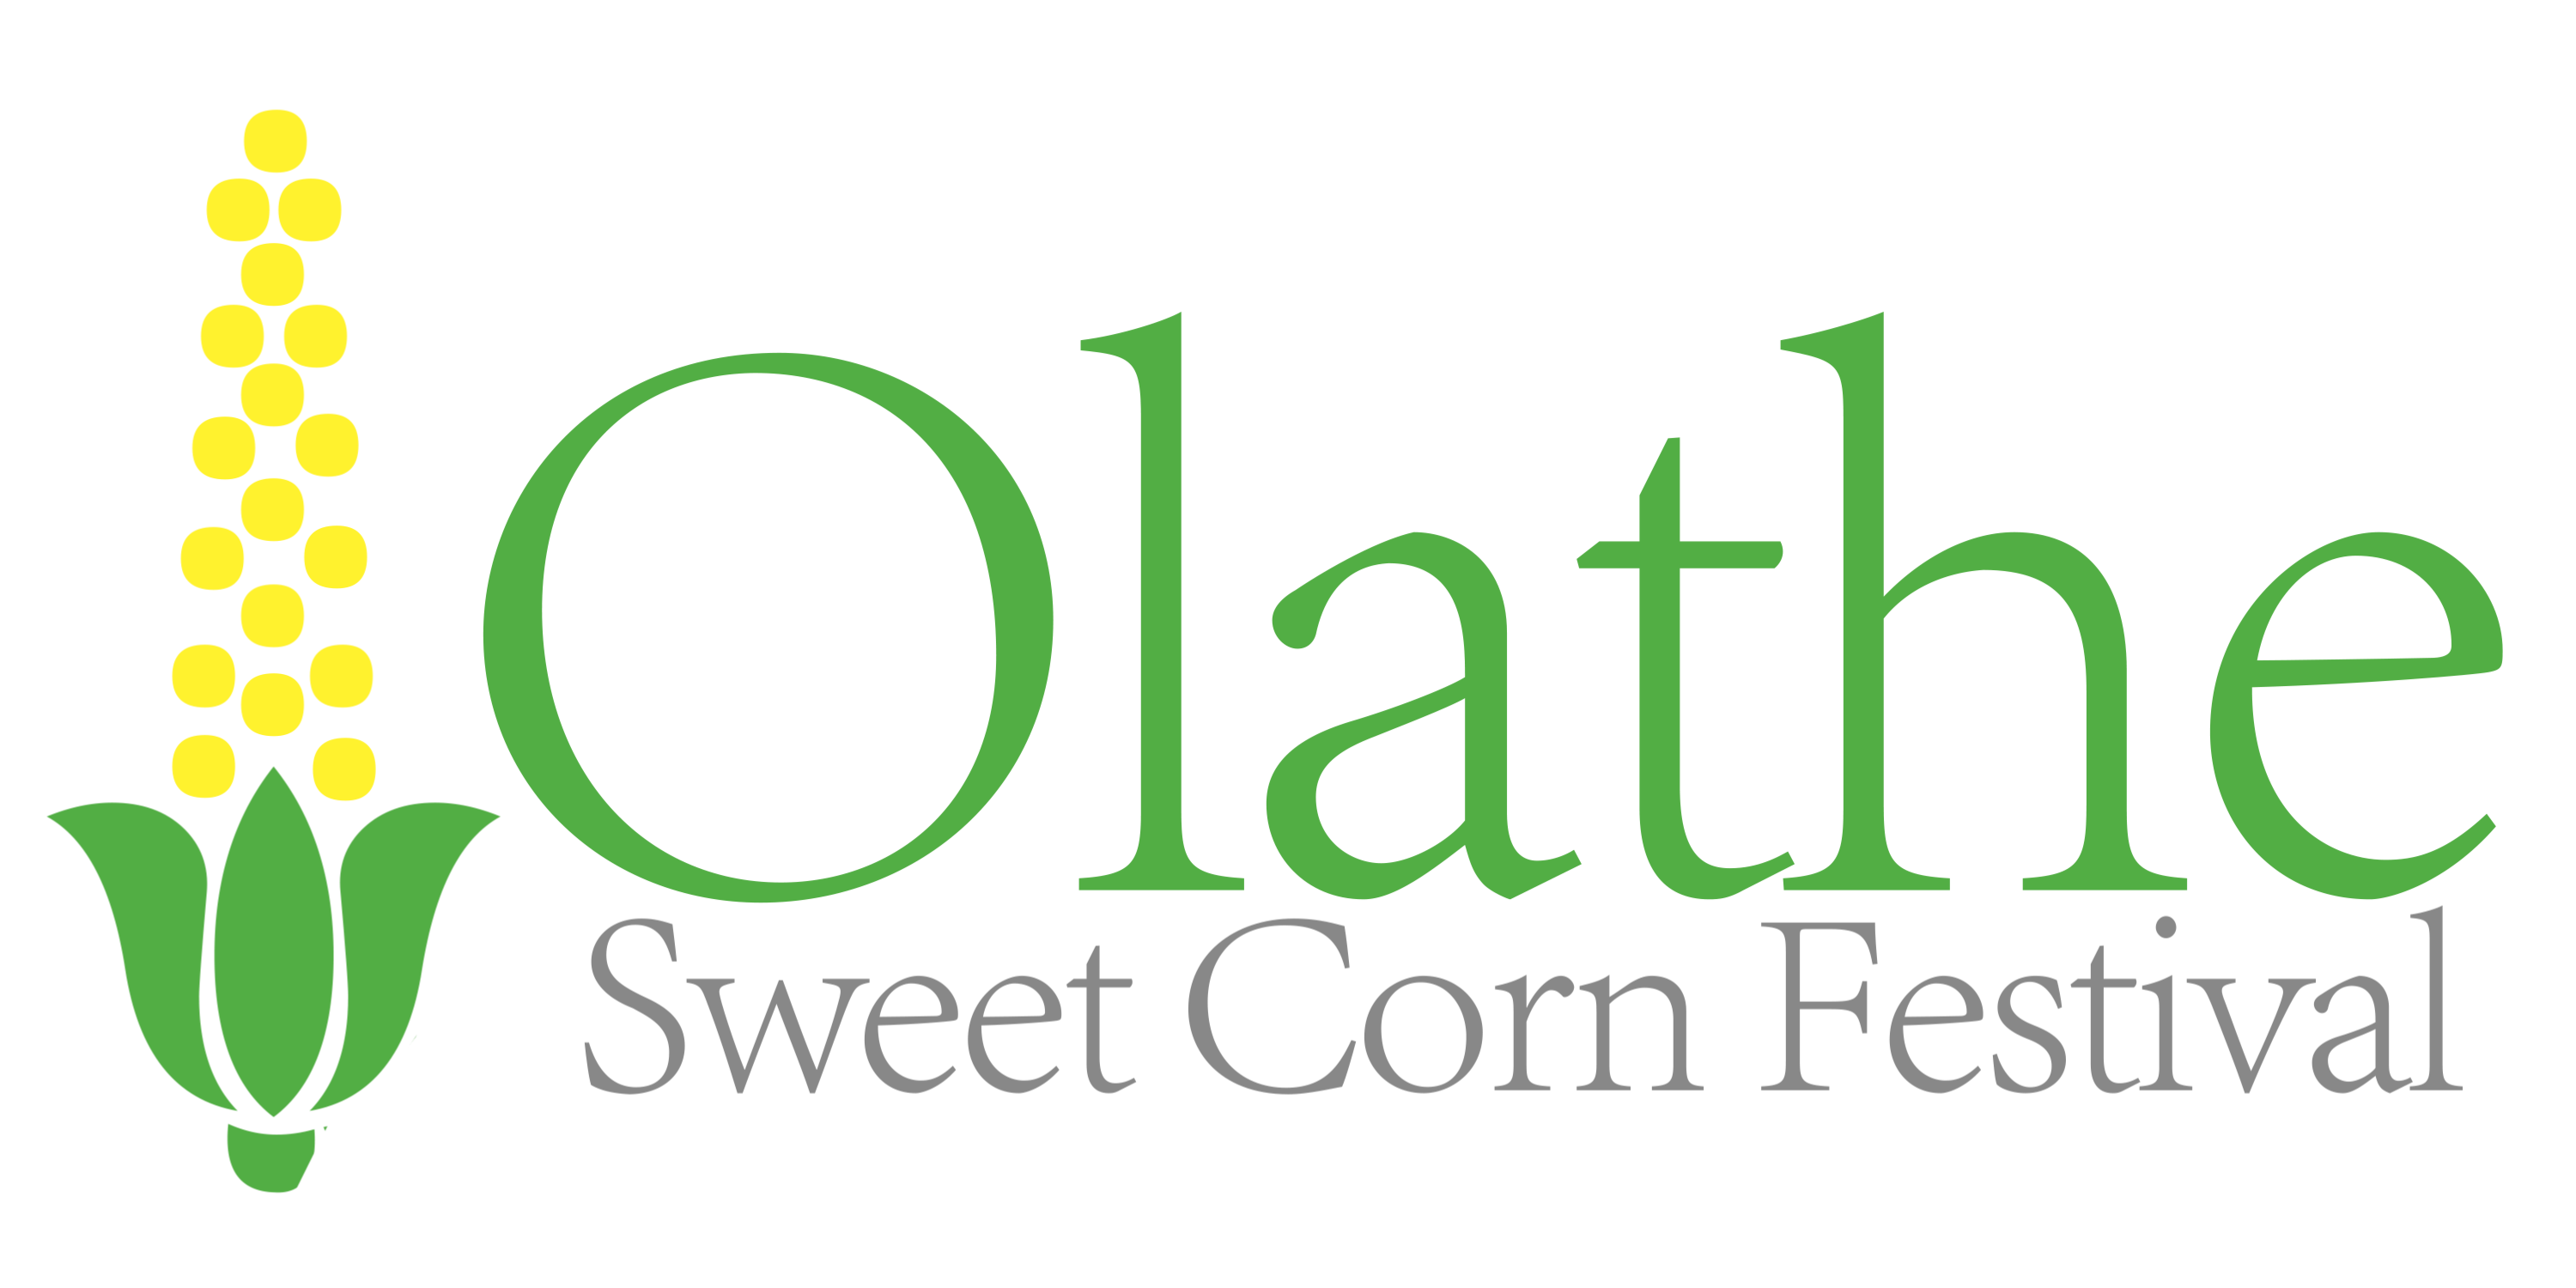 Olathe Sweet Corn Festival logo